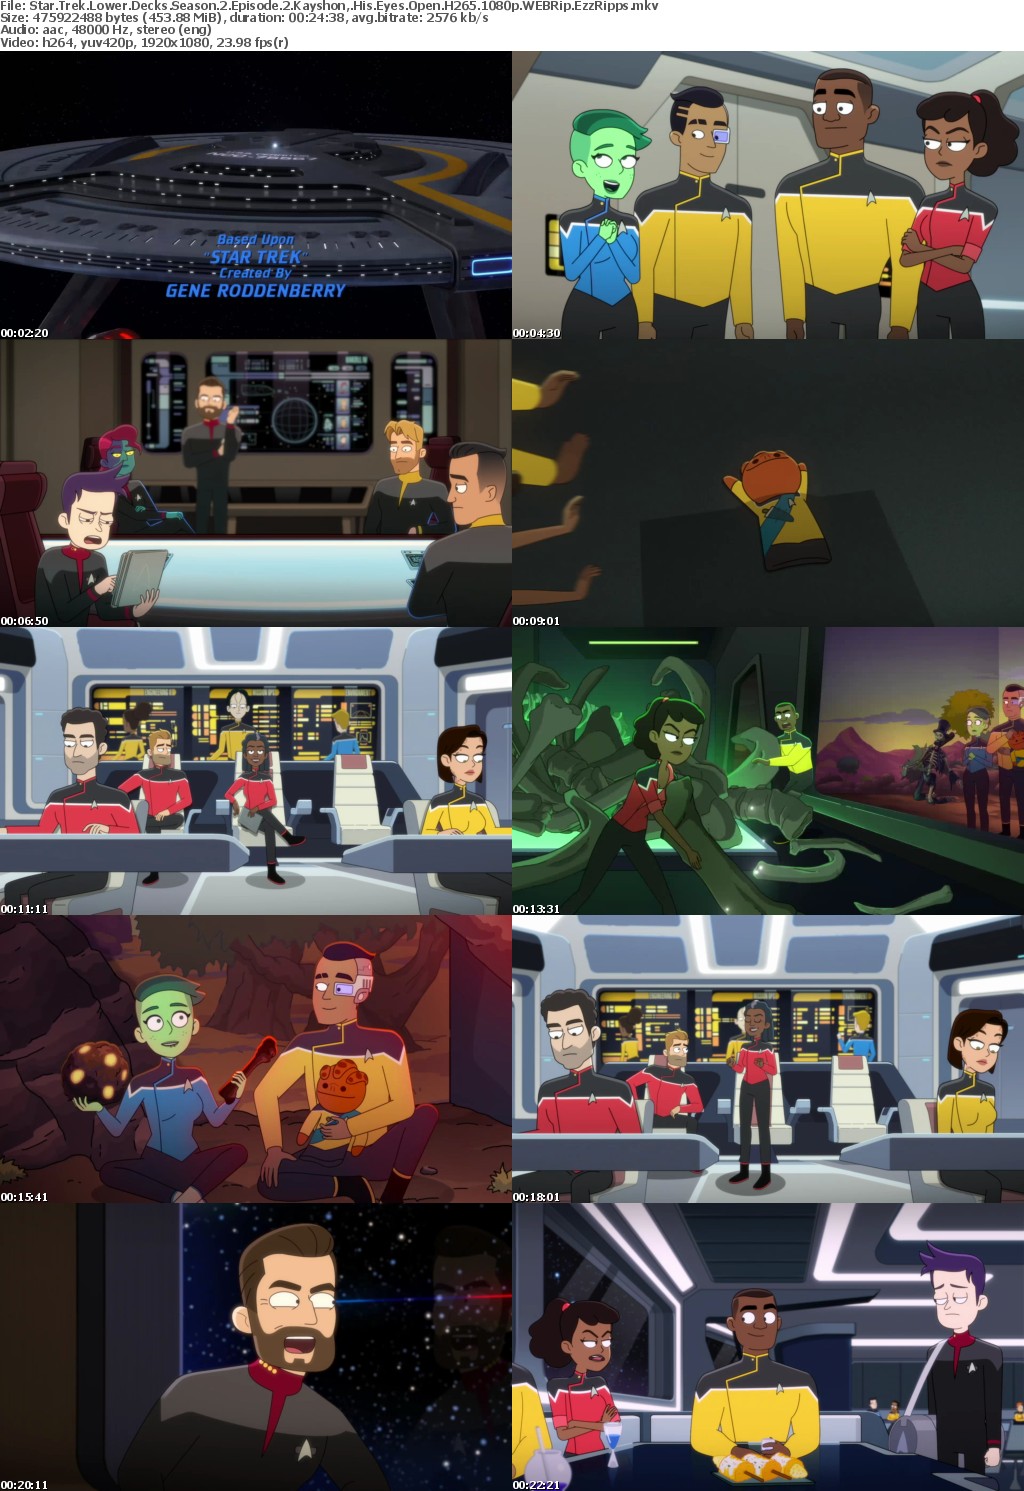 Star Trek Lower Decks Season 2 Episode 2 Kayshon, His Eyes Open H265 1080p WEBRip EzzRips